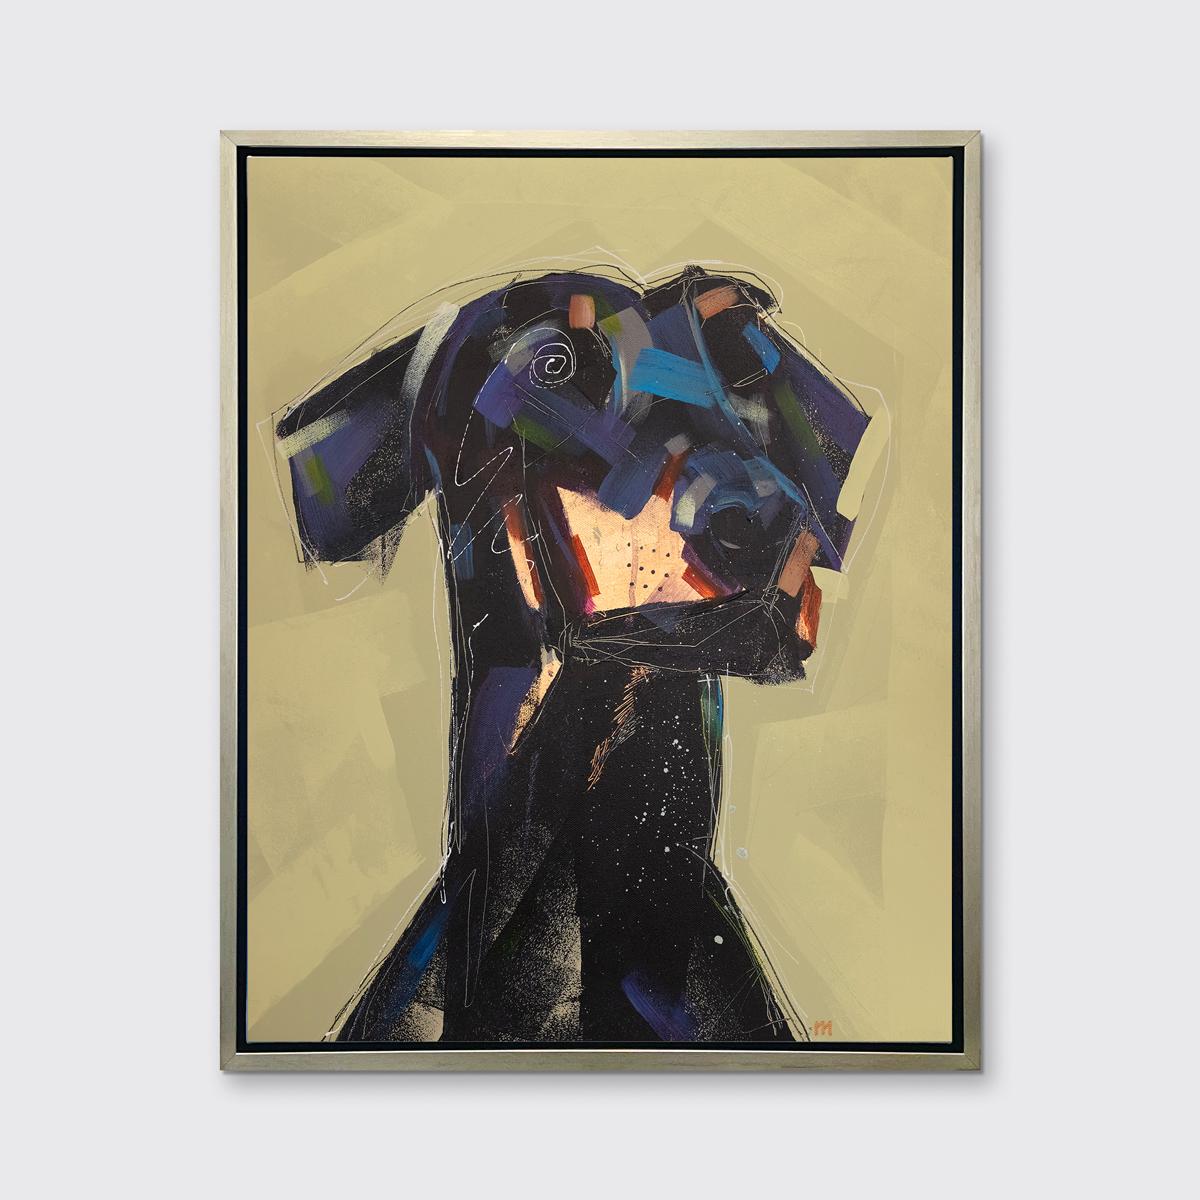 Abstract Print Russell Miyaki - "Doberman" Impression giclée en édition limitée, 45" x 36"